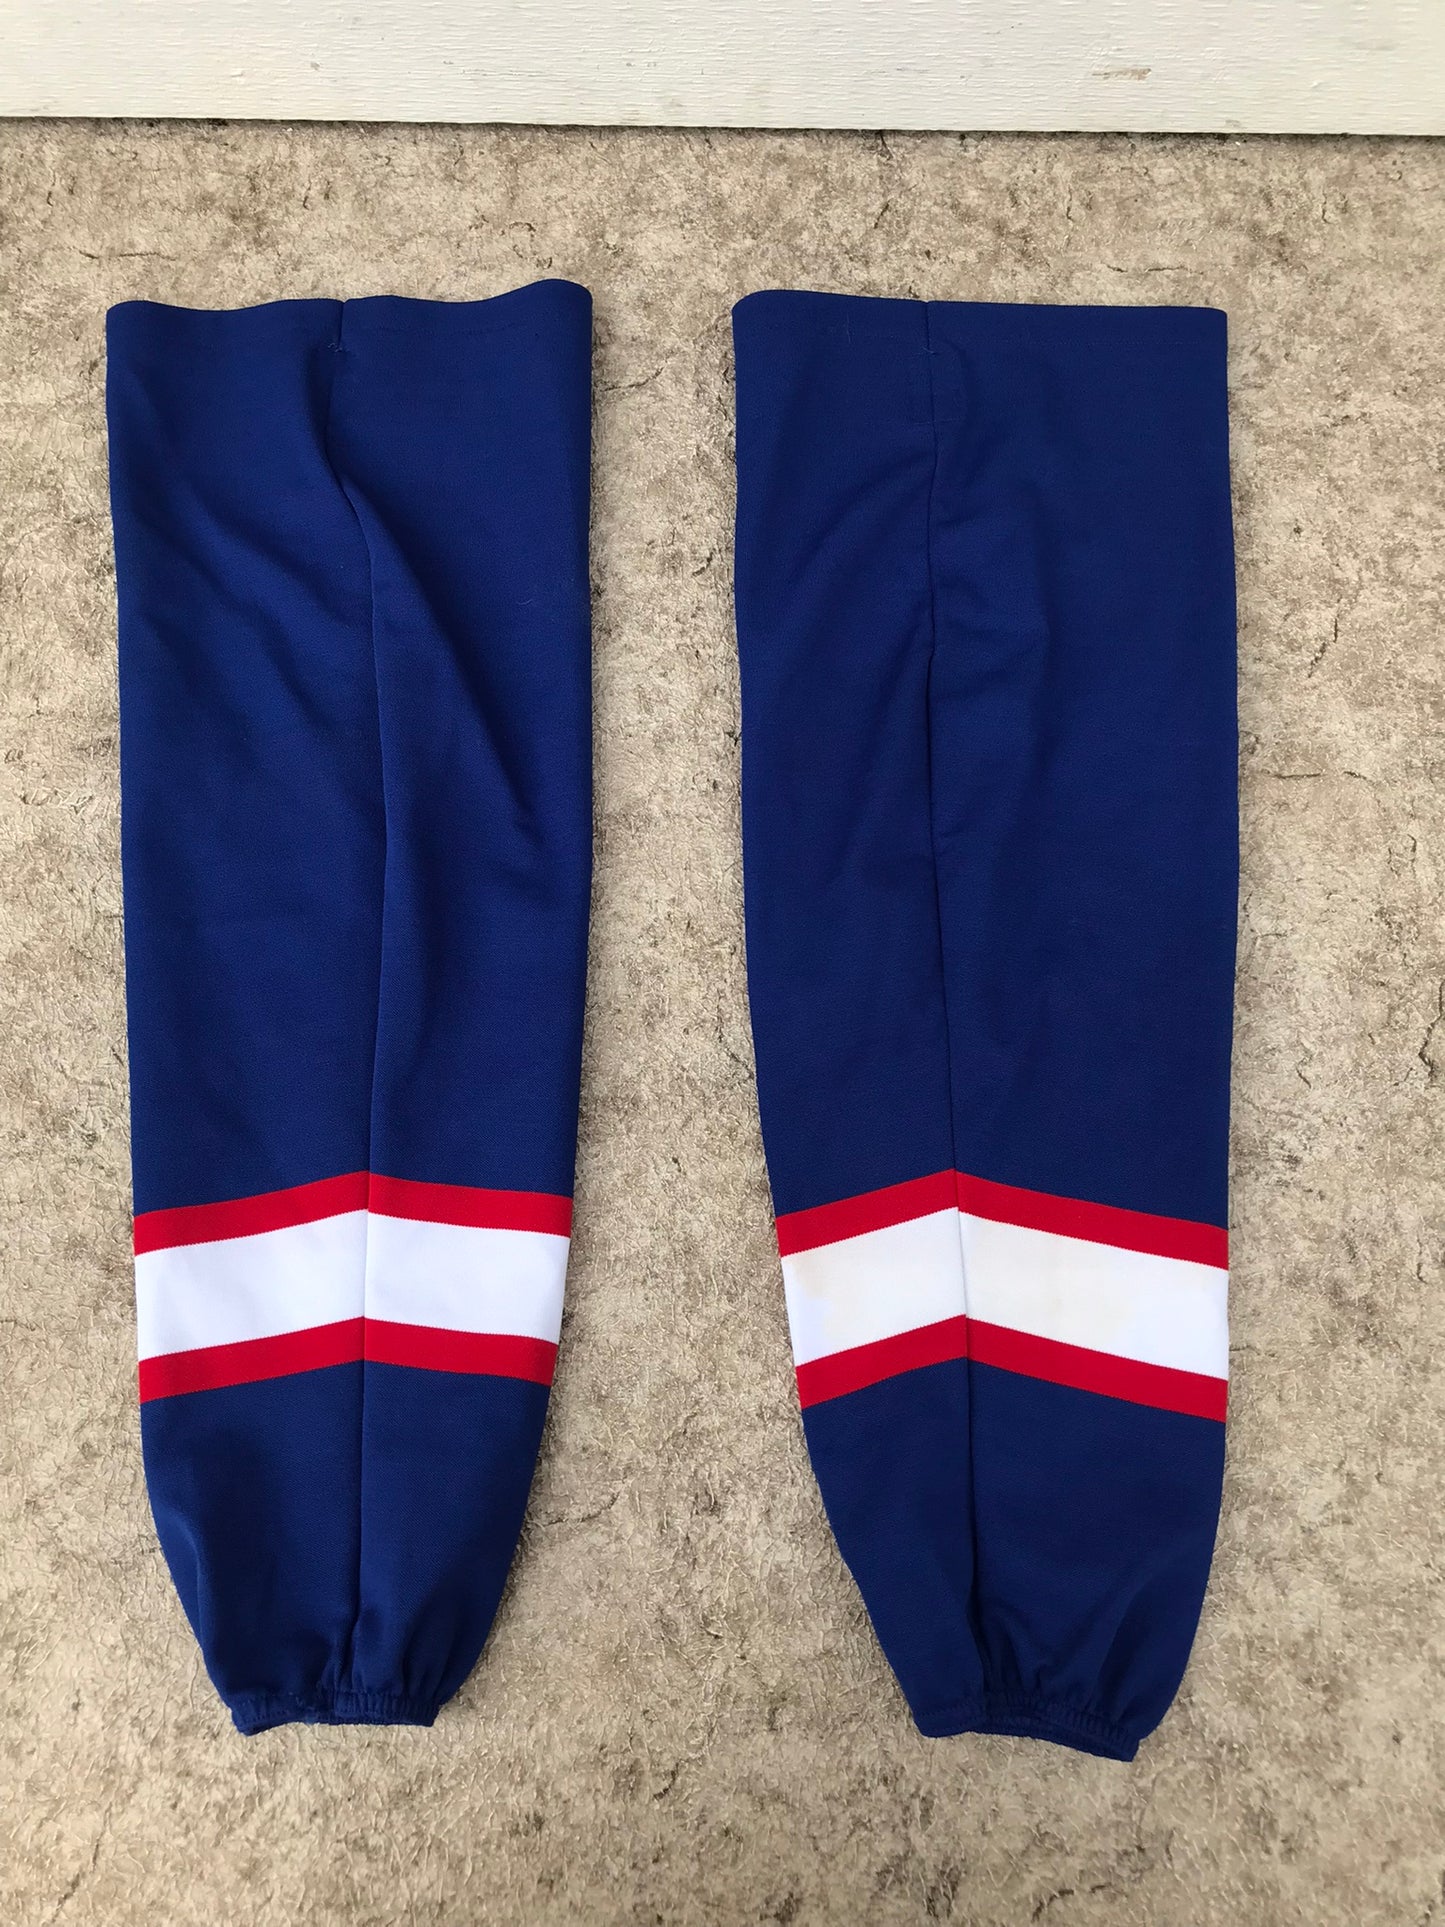 Hockey Socks 16 Inches Senior Pro Stock Blue Red Few Marks